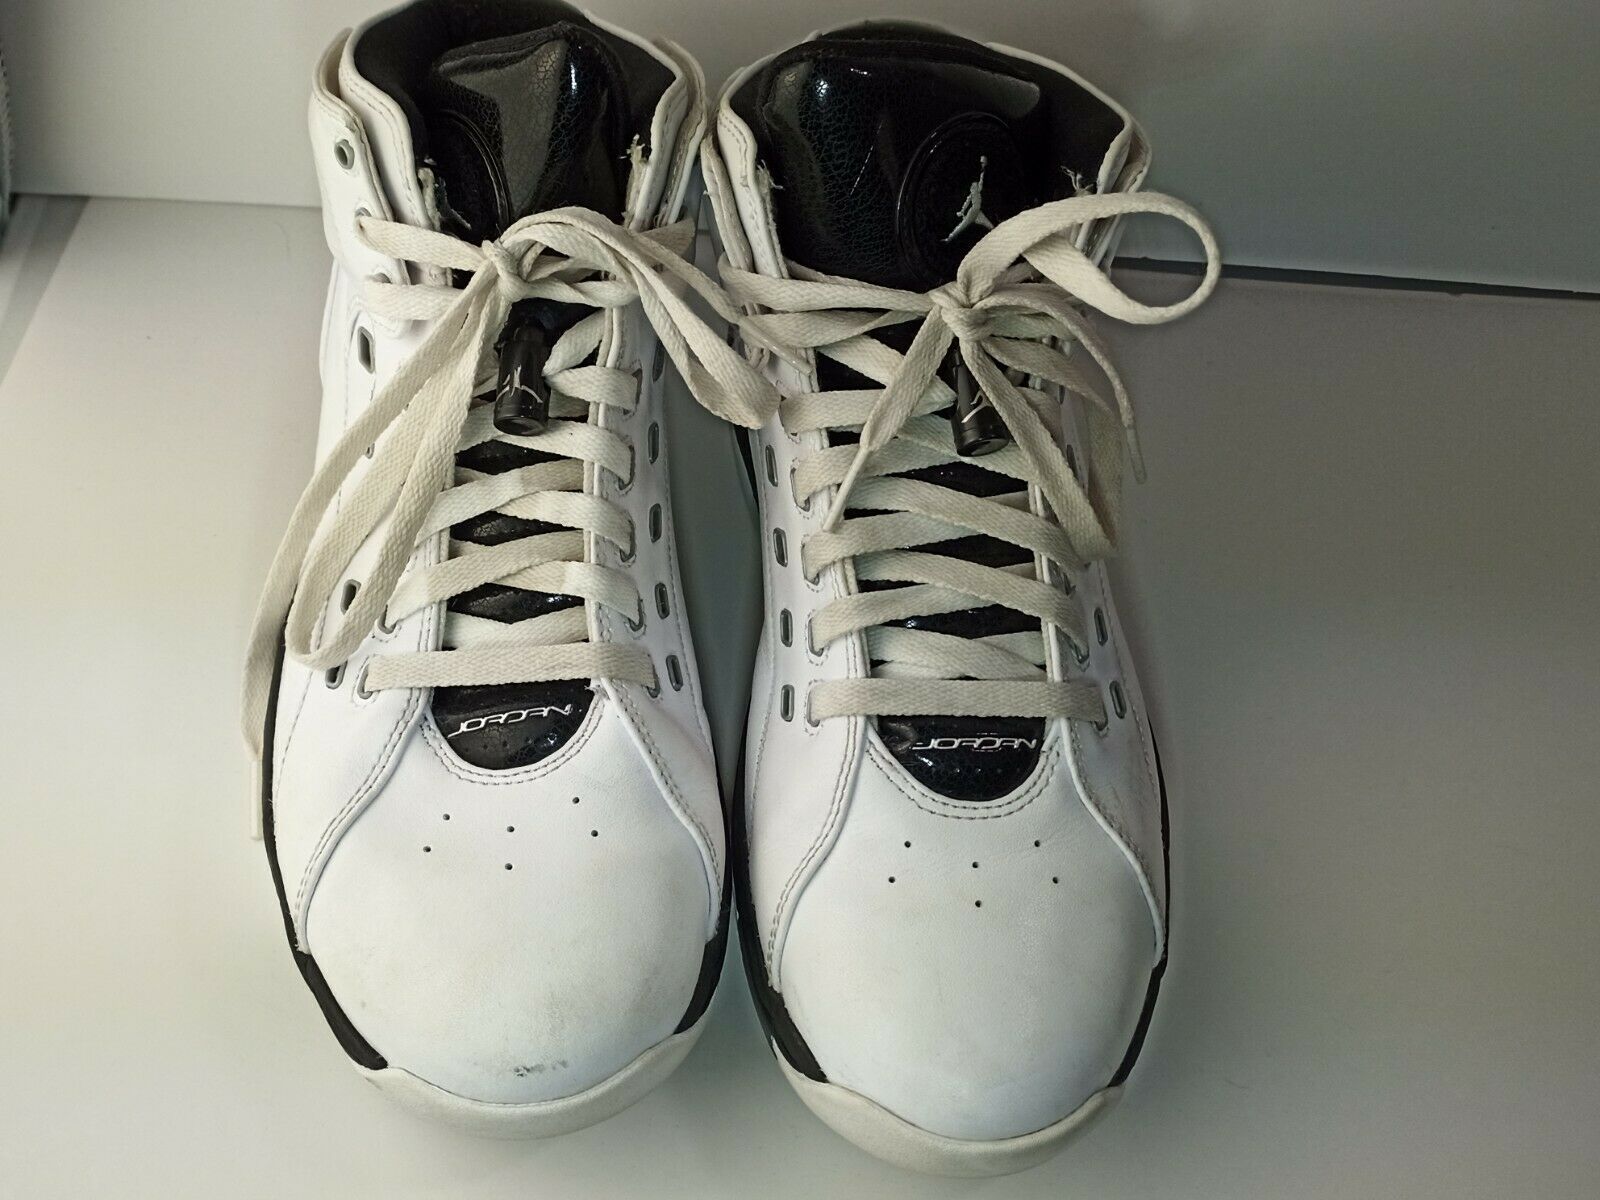 Nike Air Jordan Old School 317223-113 Men's Size 9.5 White Black Grey Shoes